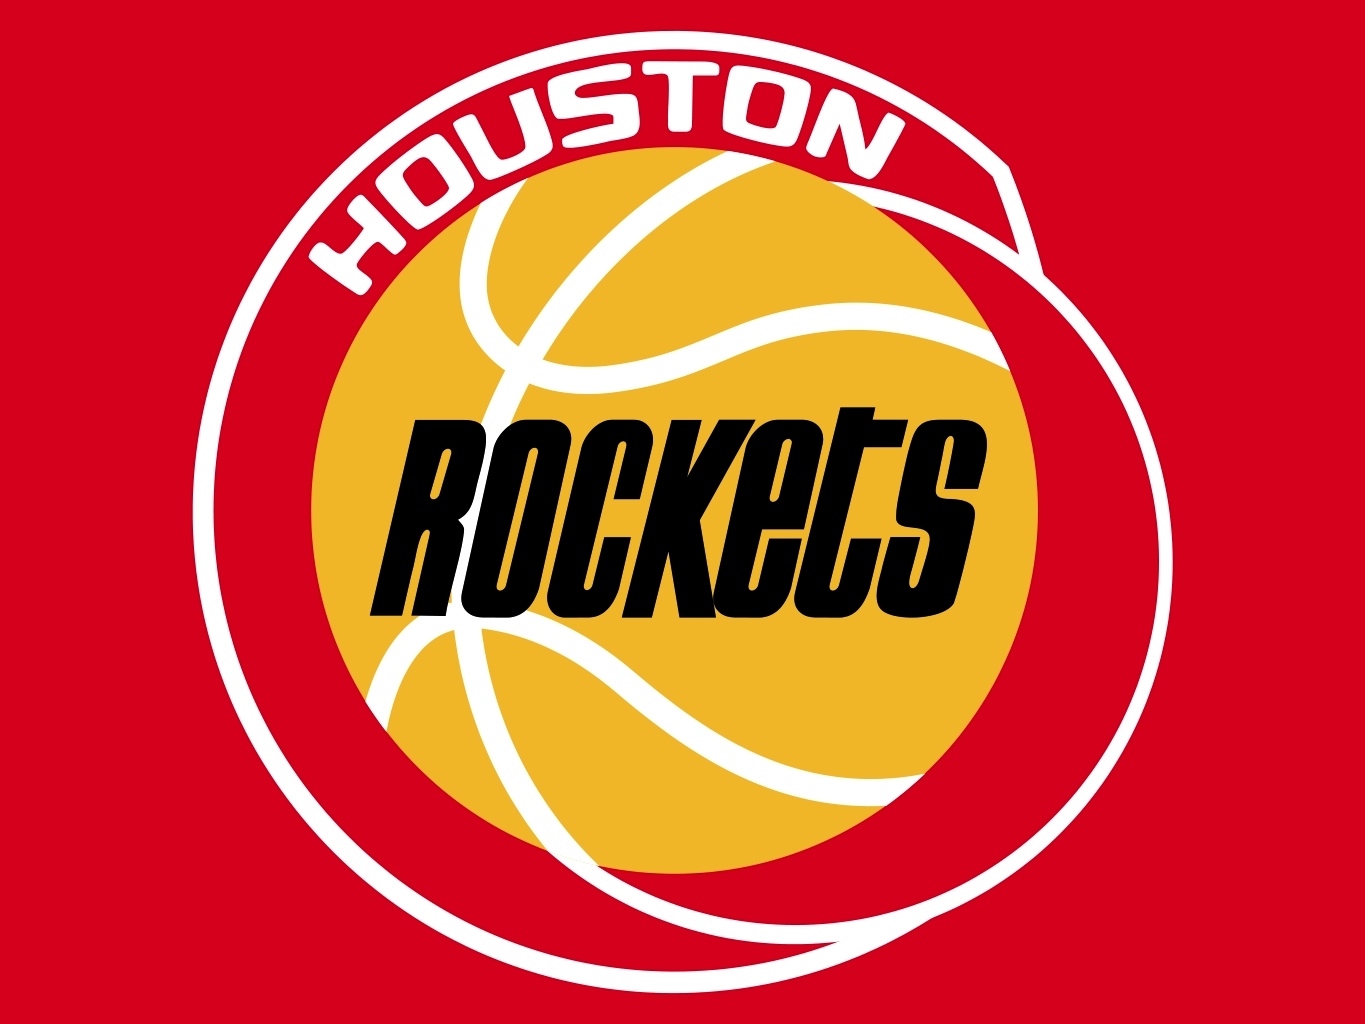 Houston Rockets Tickets